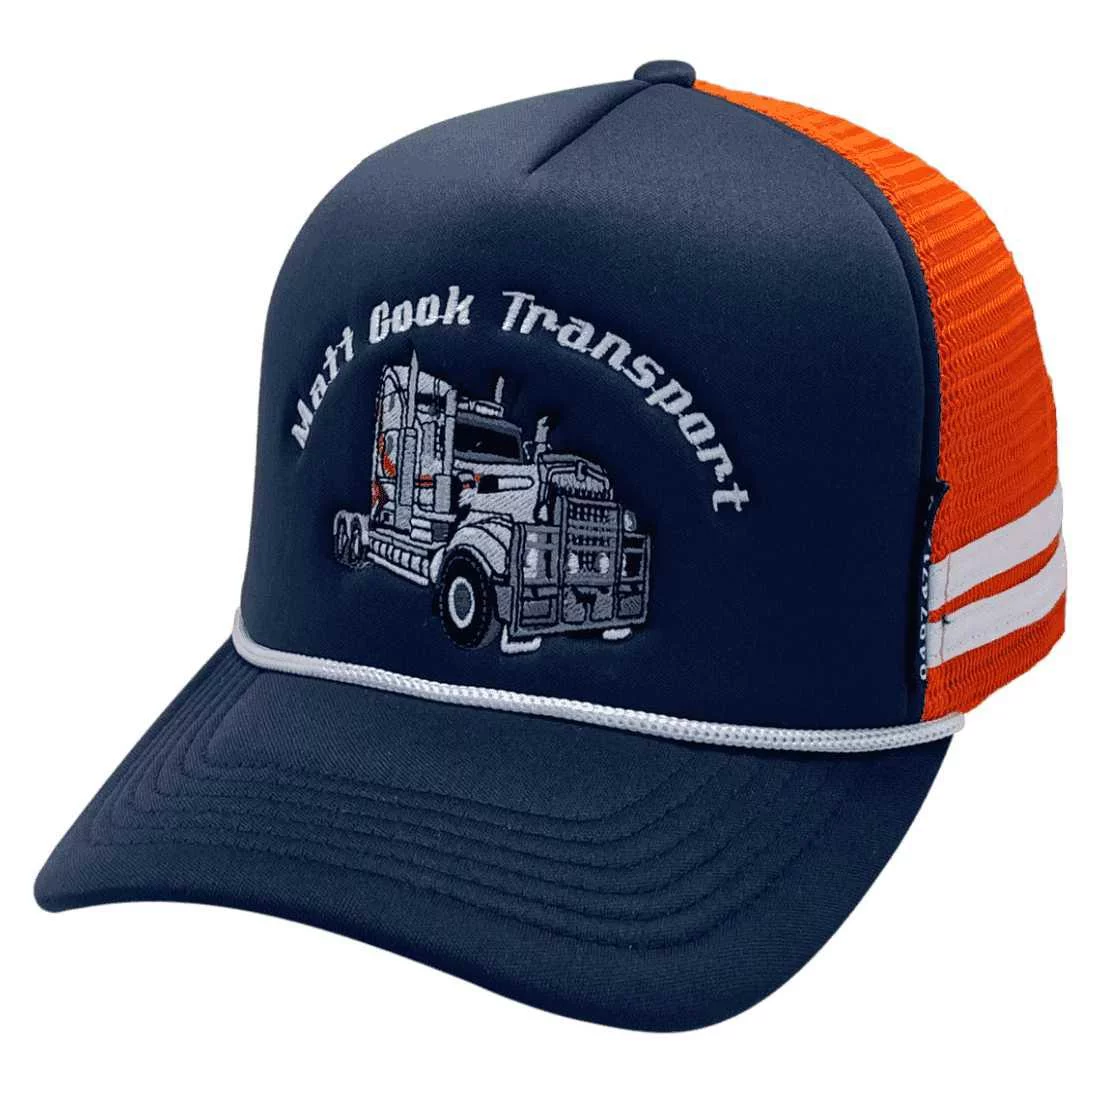 Matt Cook Transport Harvey WA HP Original Foamie Aussie Trucker Hat with Australian Head Fit Crown Size 2 Side Bands and Sash Cord